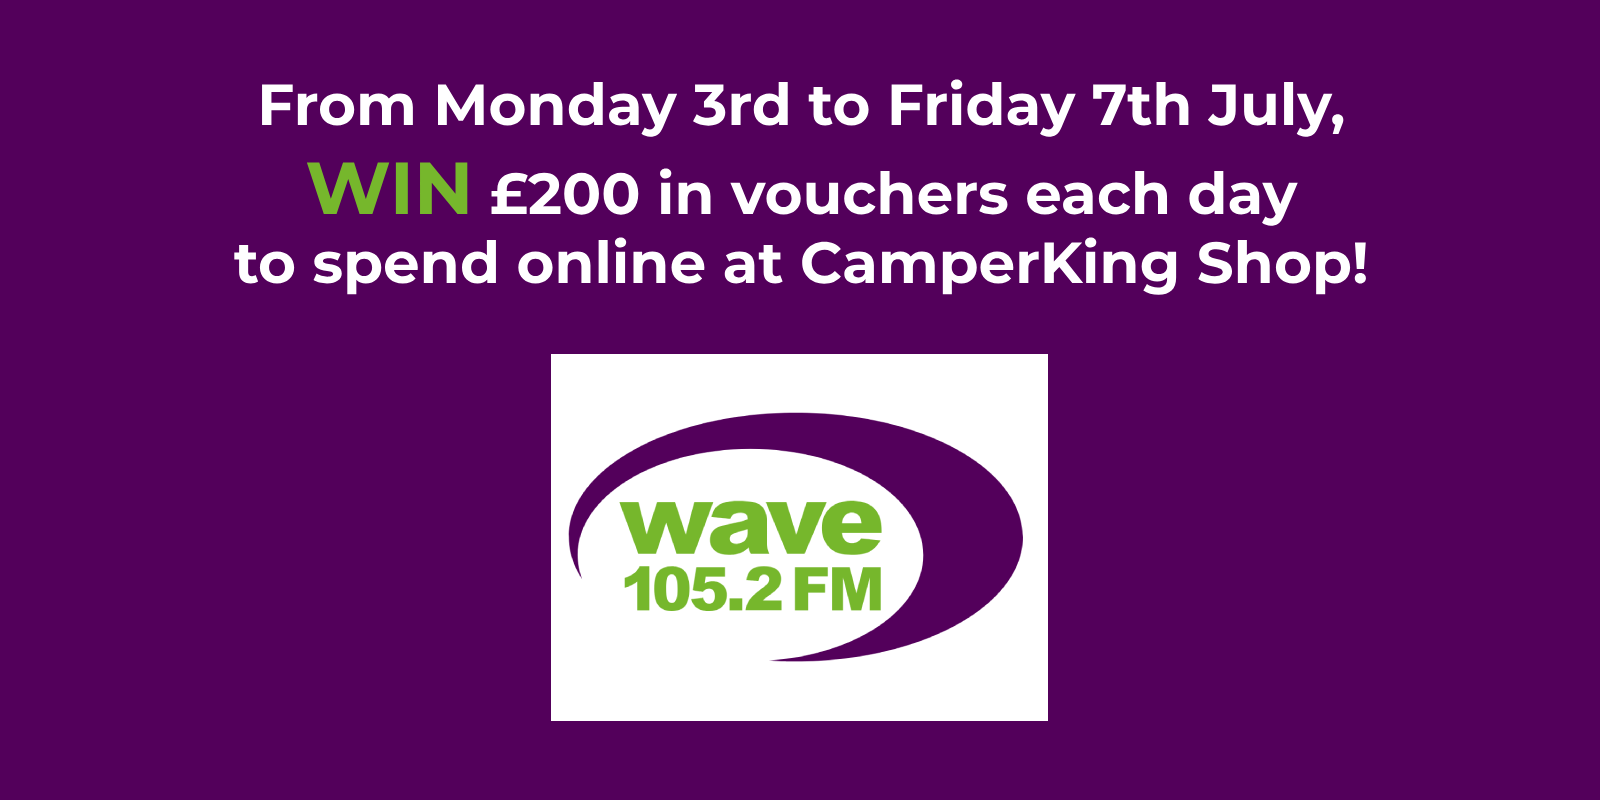 Win £200 of CamperKing Shop Vouchers Each Day Next Week